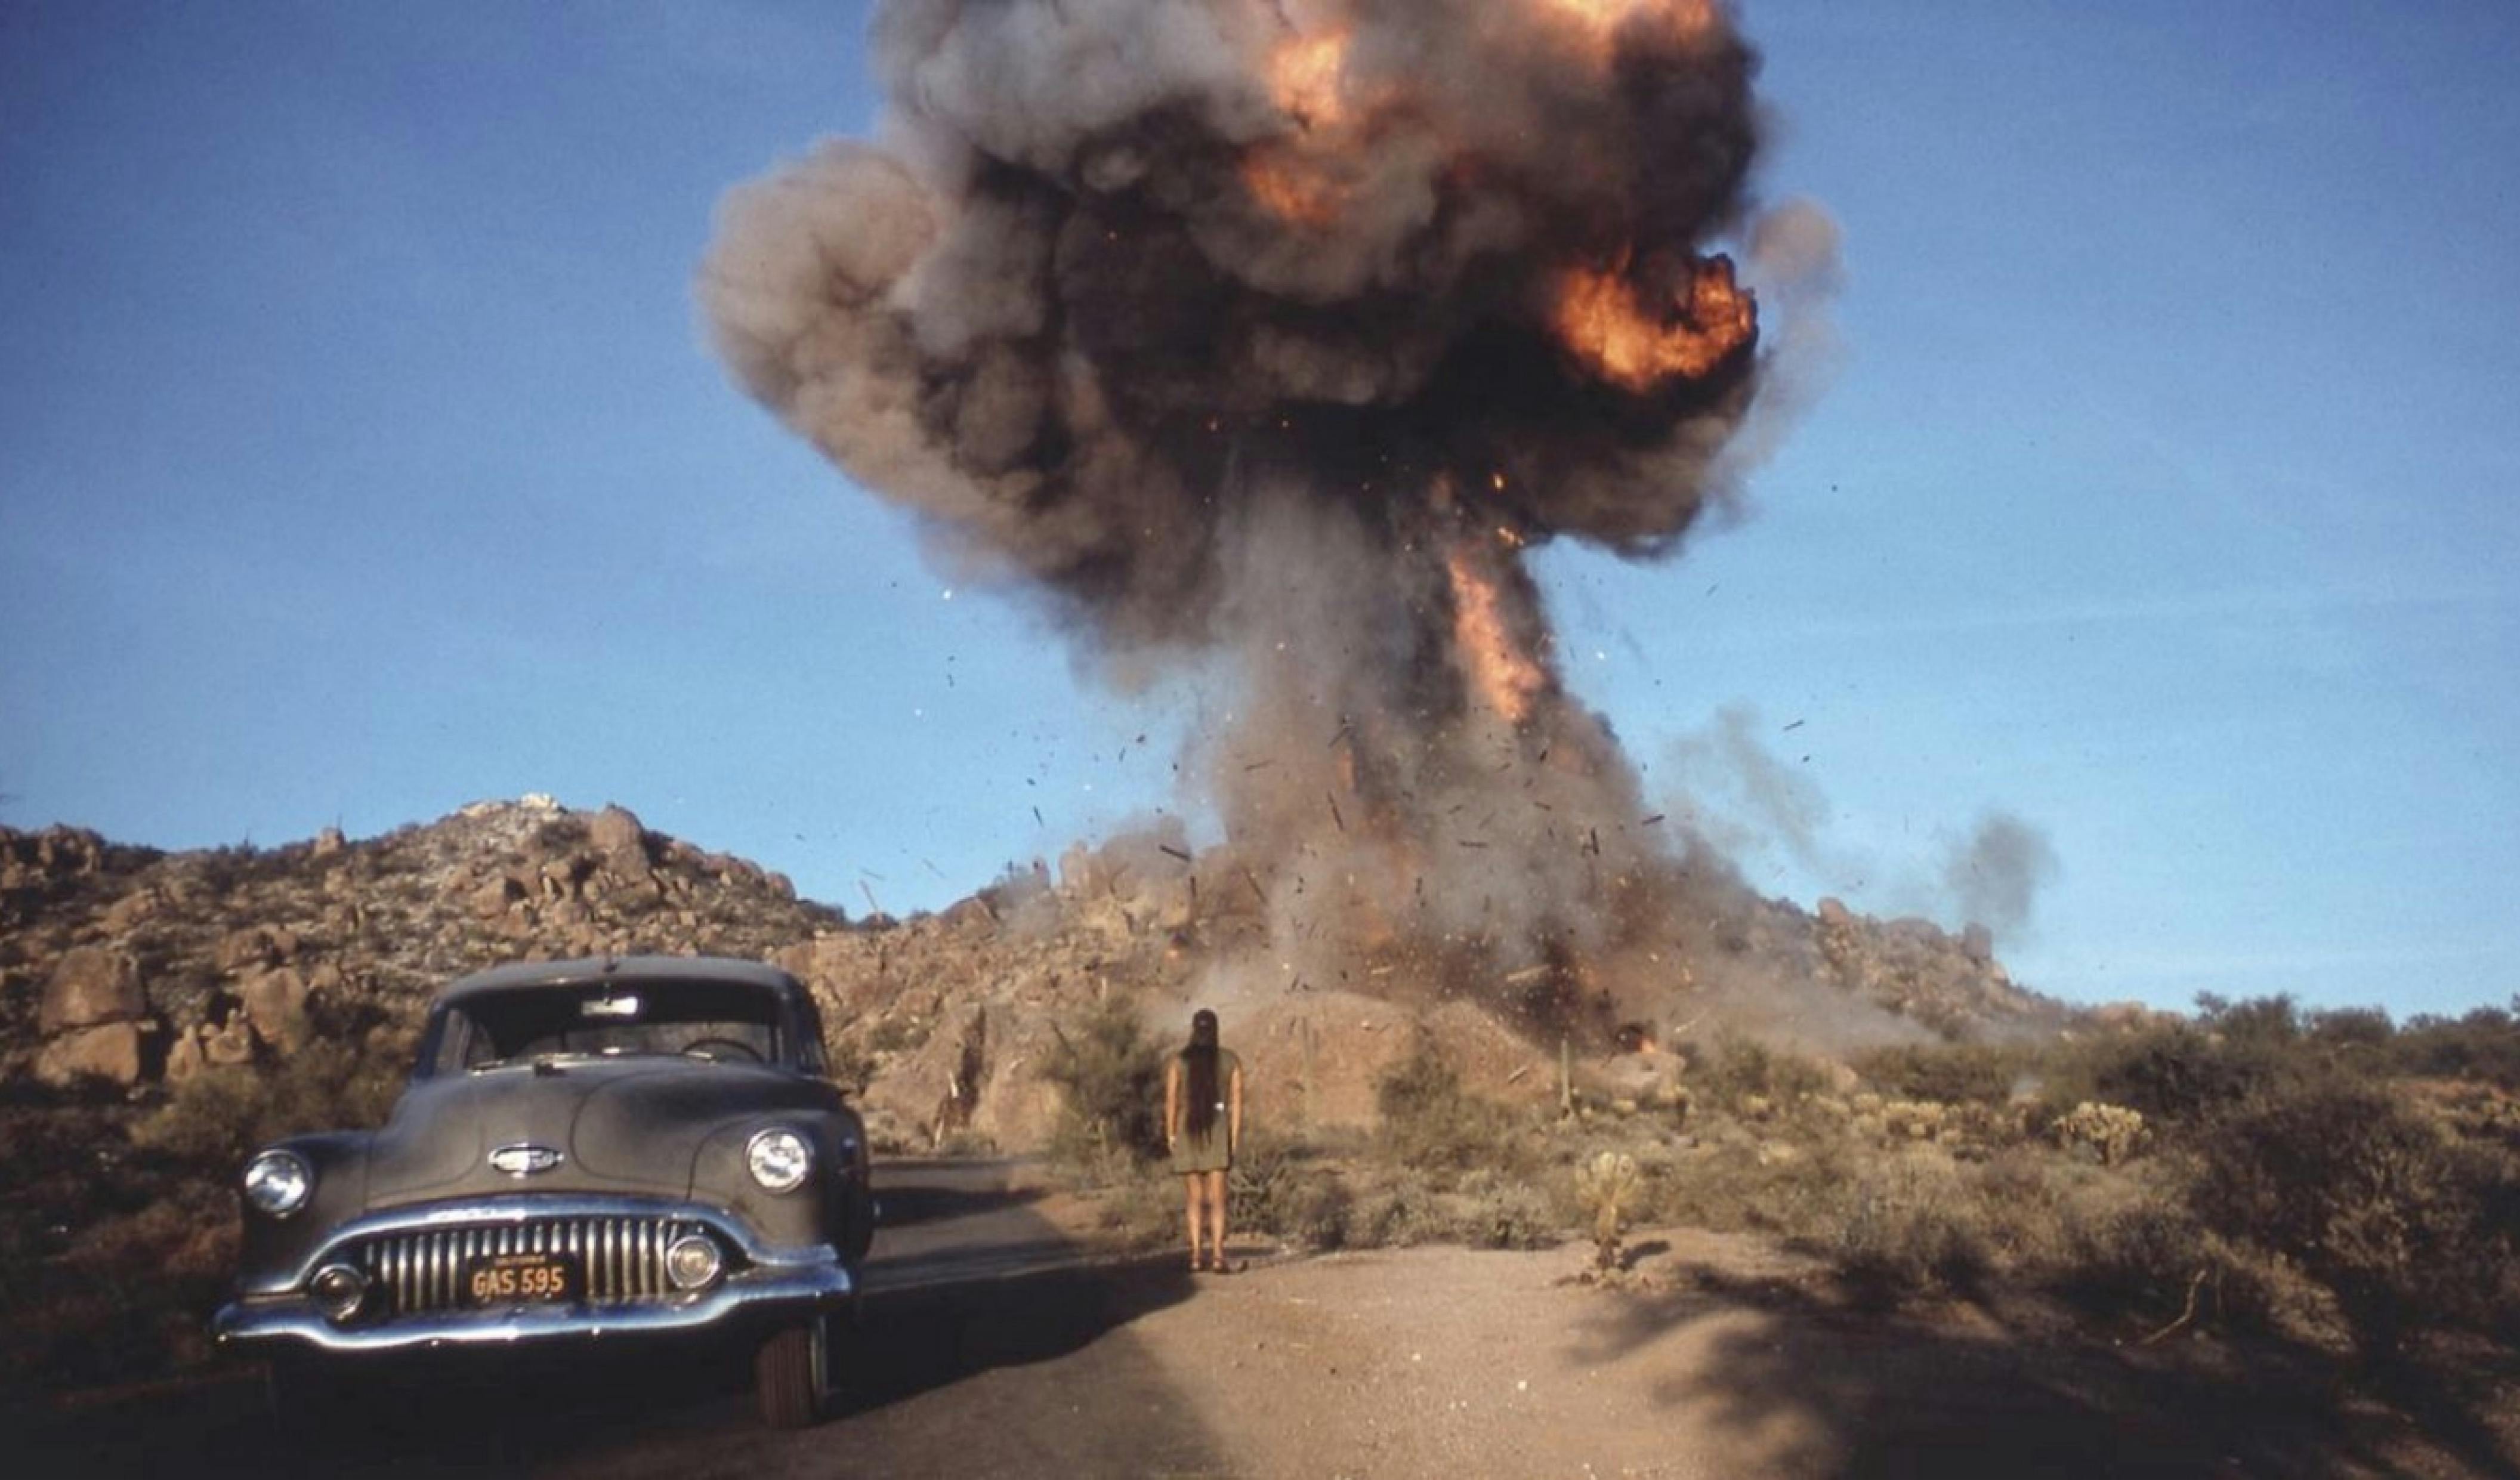 explosion on a desert landscape